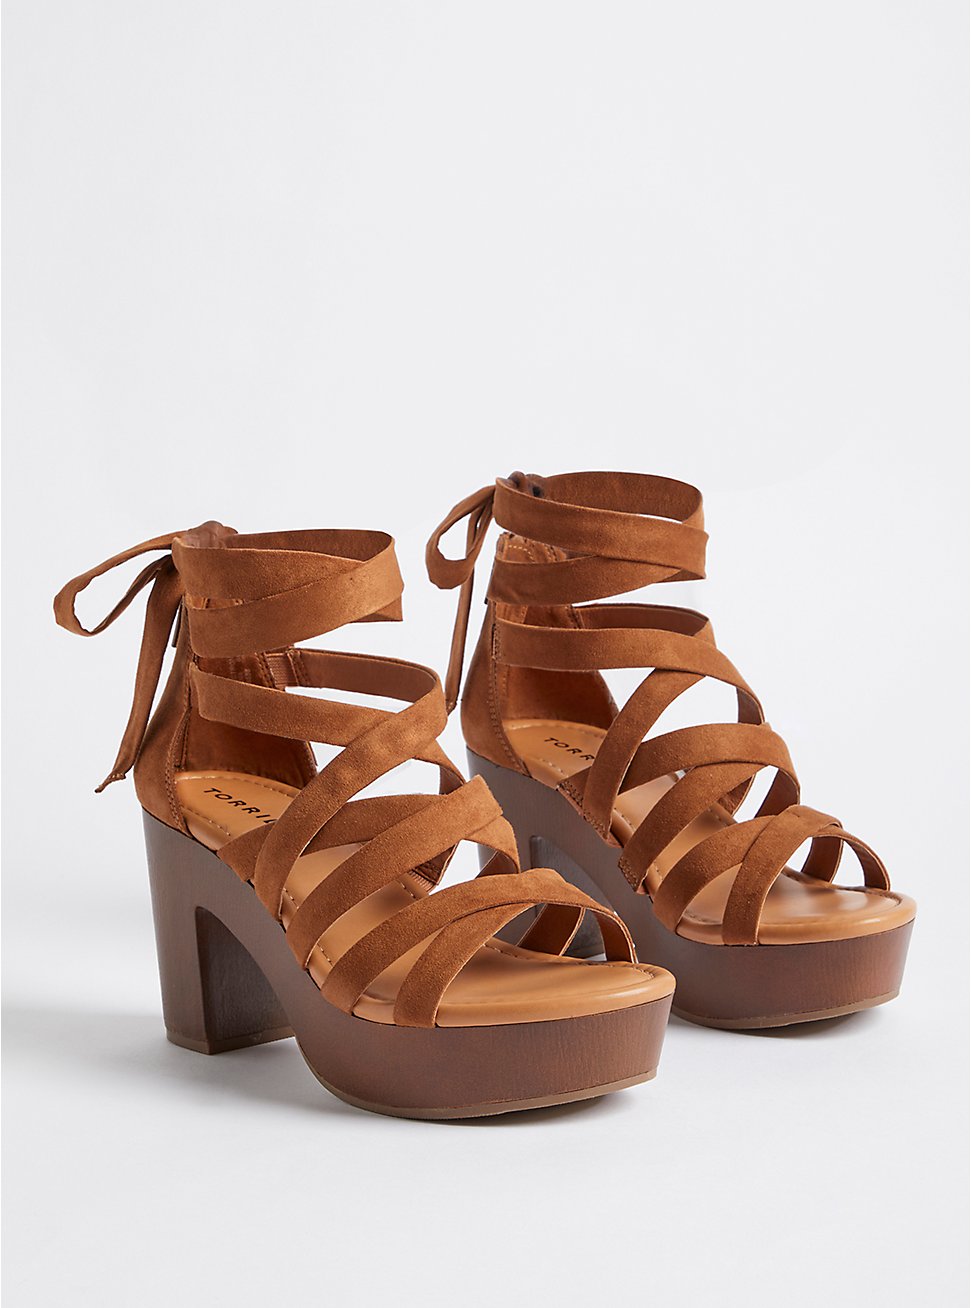 Plus Size Ankle Wrap Wood Heel Shoe - Faux Suede Brown (WW), BROWN, hi-res